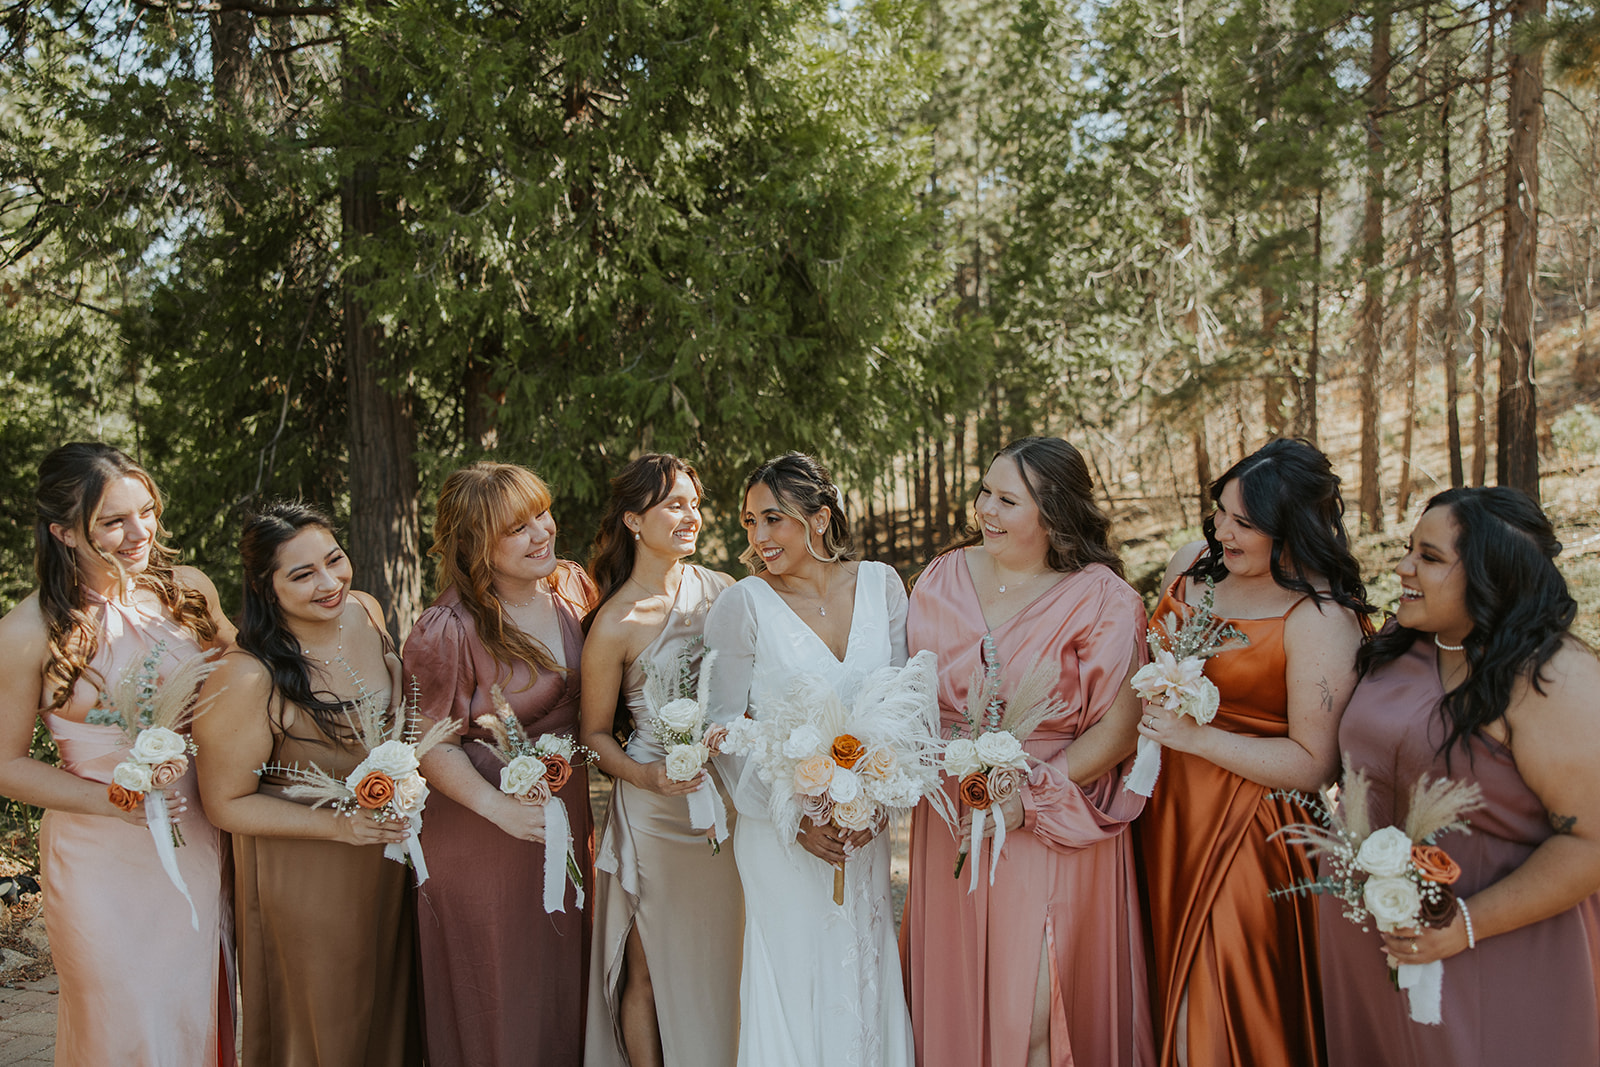 bride and bridesmaids photos from a California mountain wedding at lillaskog lodge